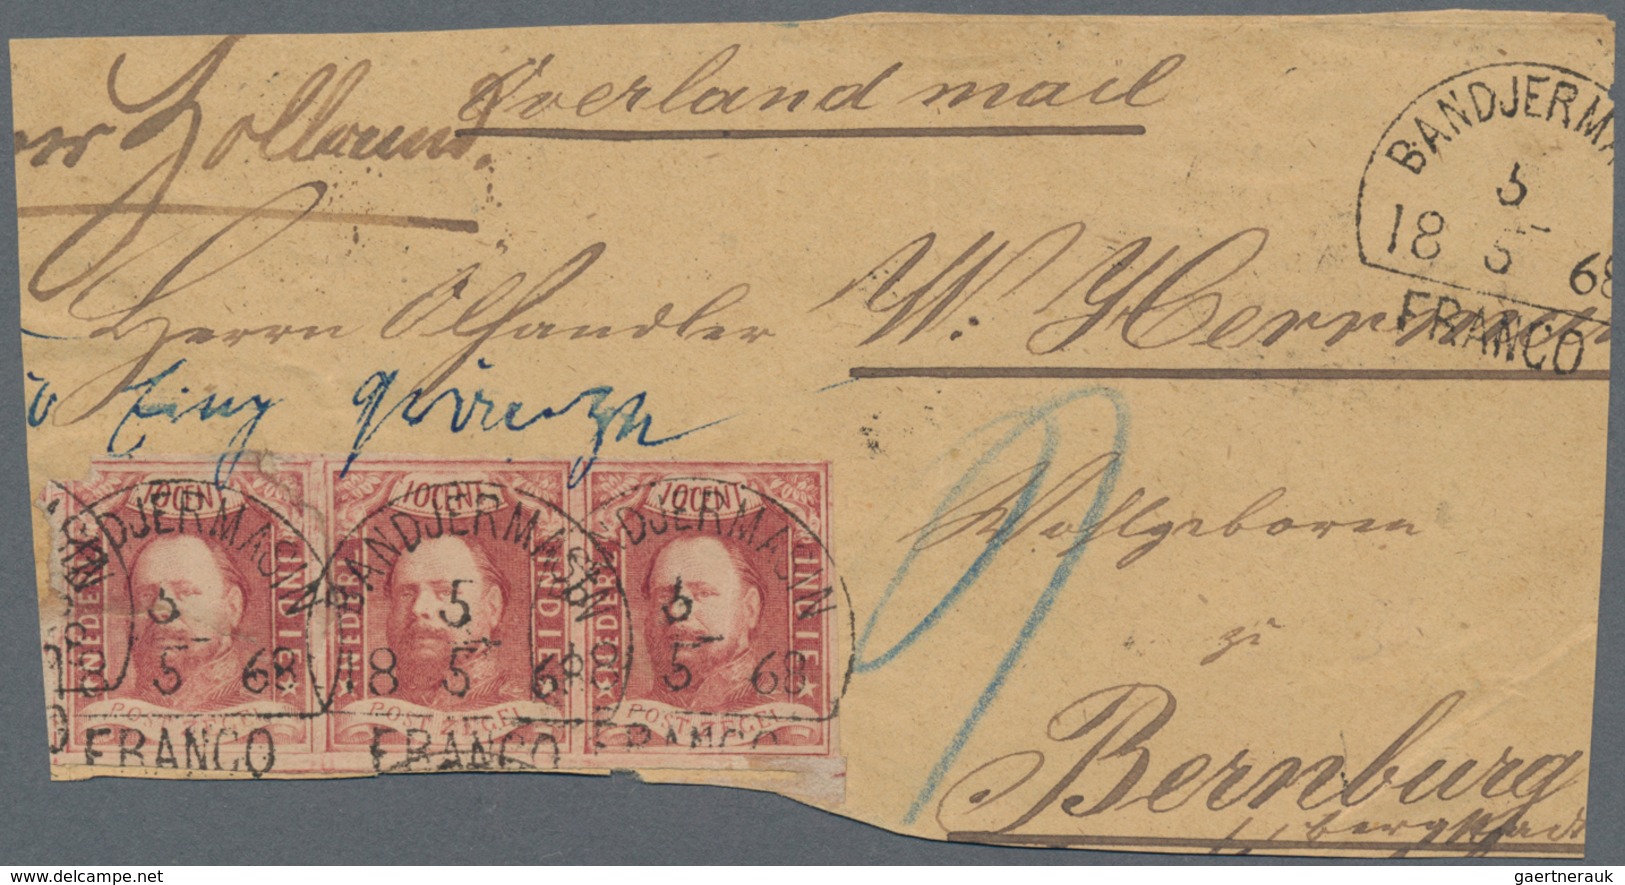 Niederländisch-Indien: 1864 Kind Wilhelm III. 10c. Lake Horizontal Strip Of Three, Used On Large Par - Netherlands Indies